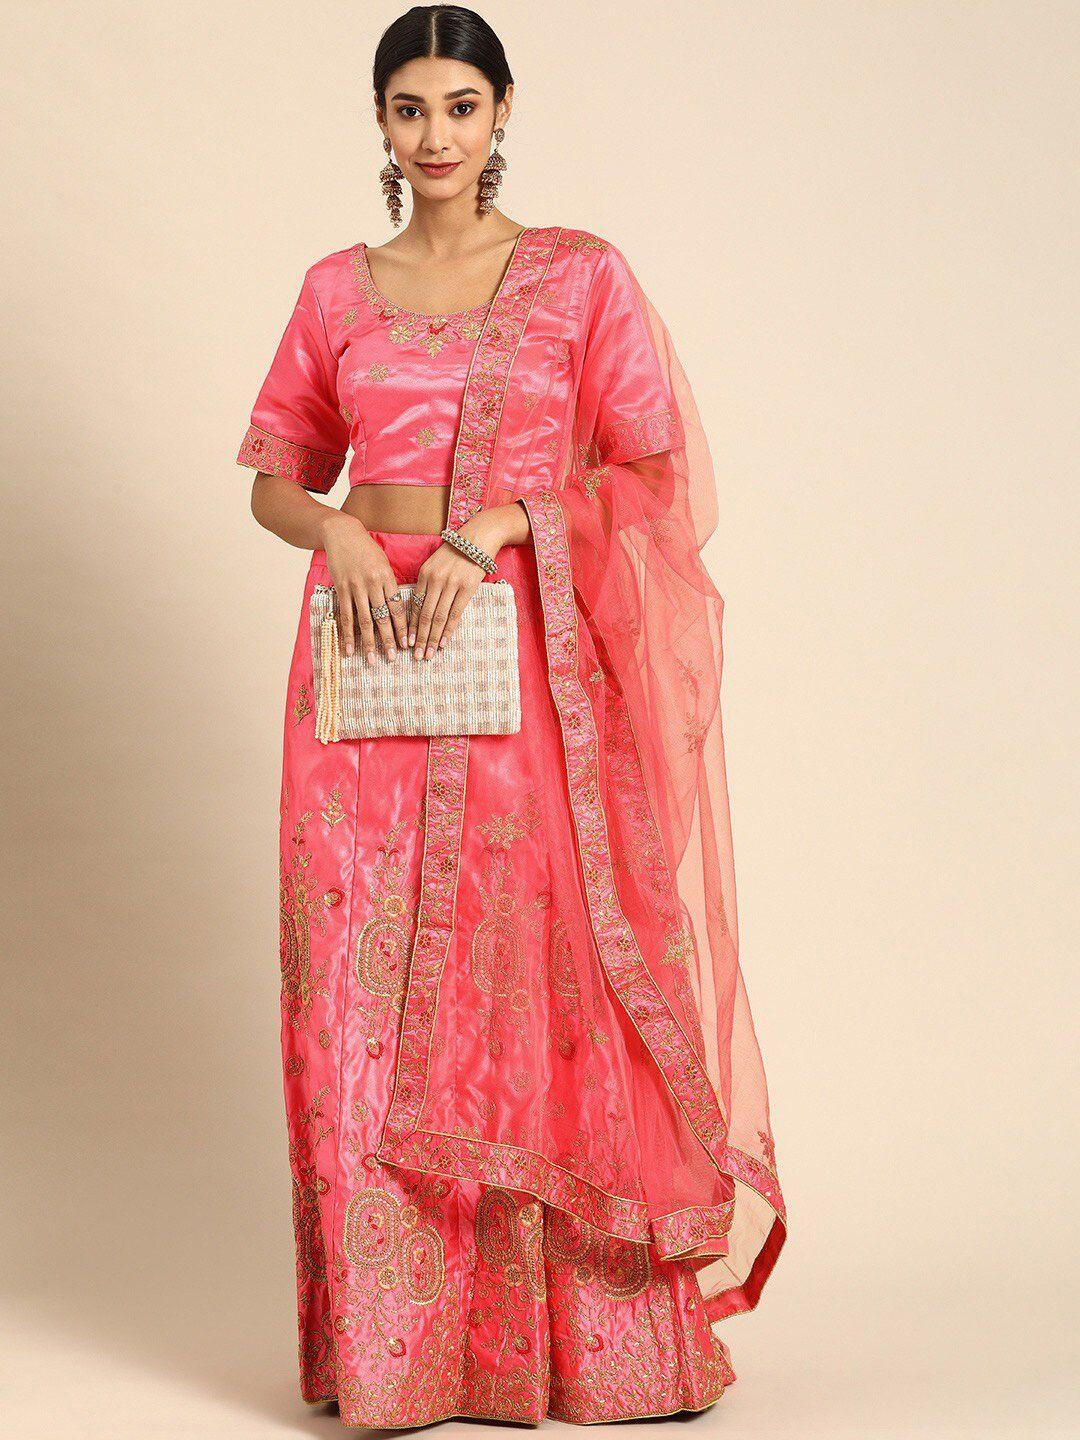 kalini embroidered thread work semi-stitched lehenga & blouse with dupatta